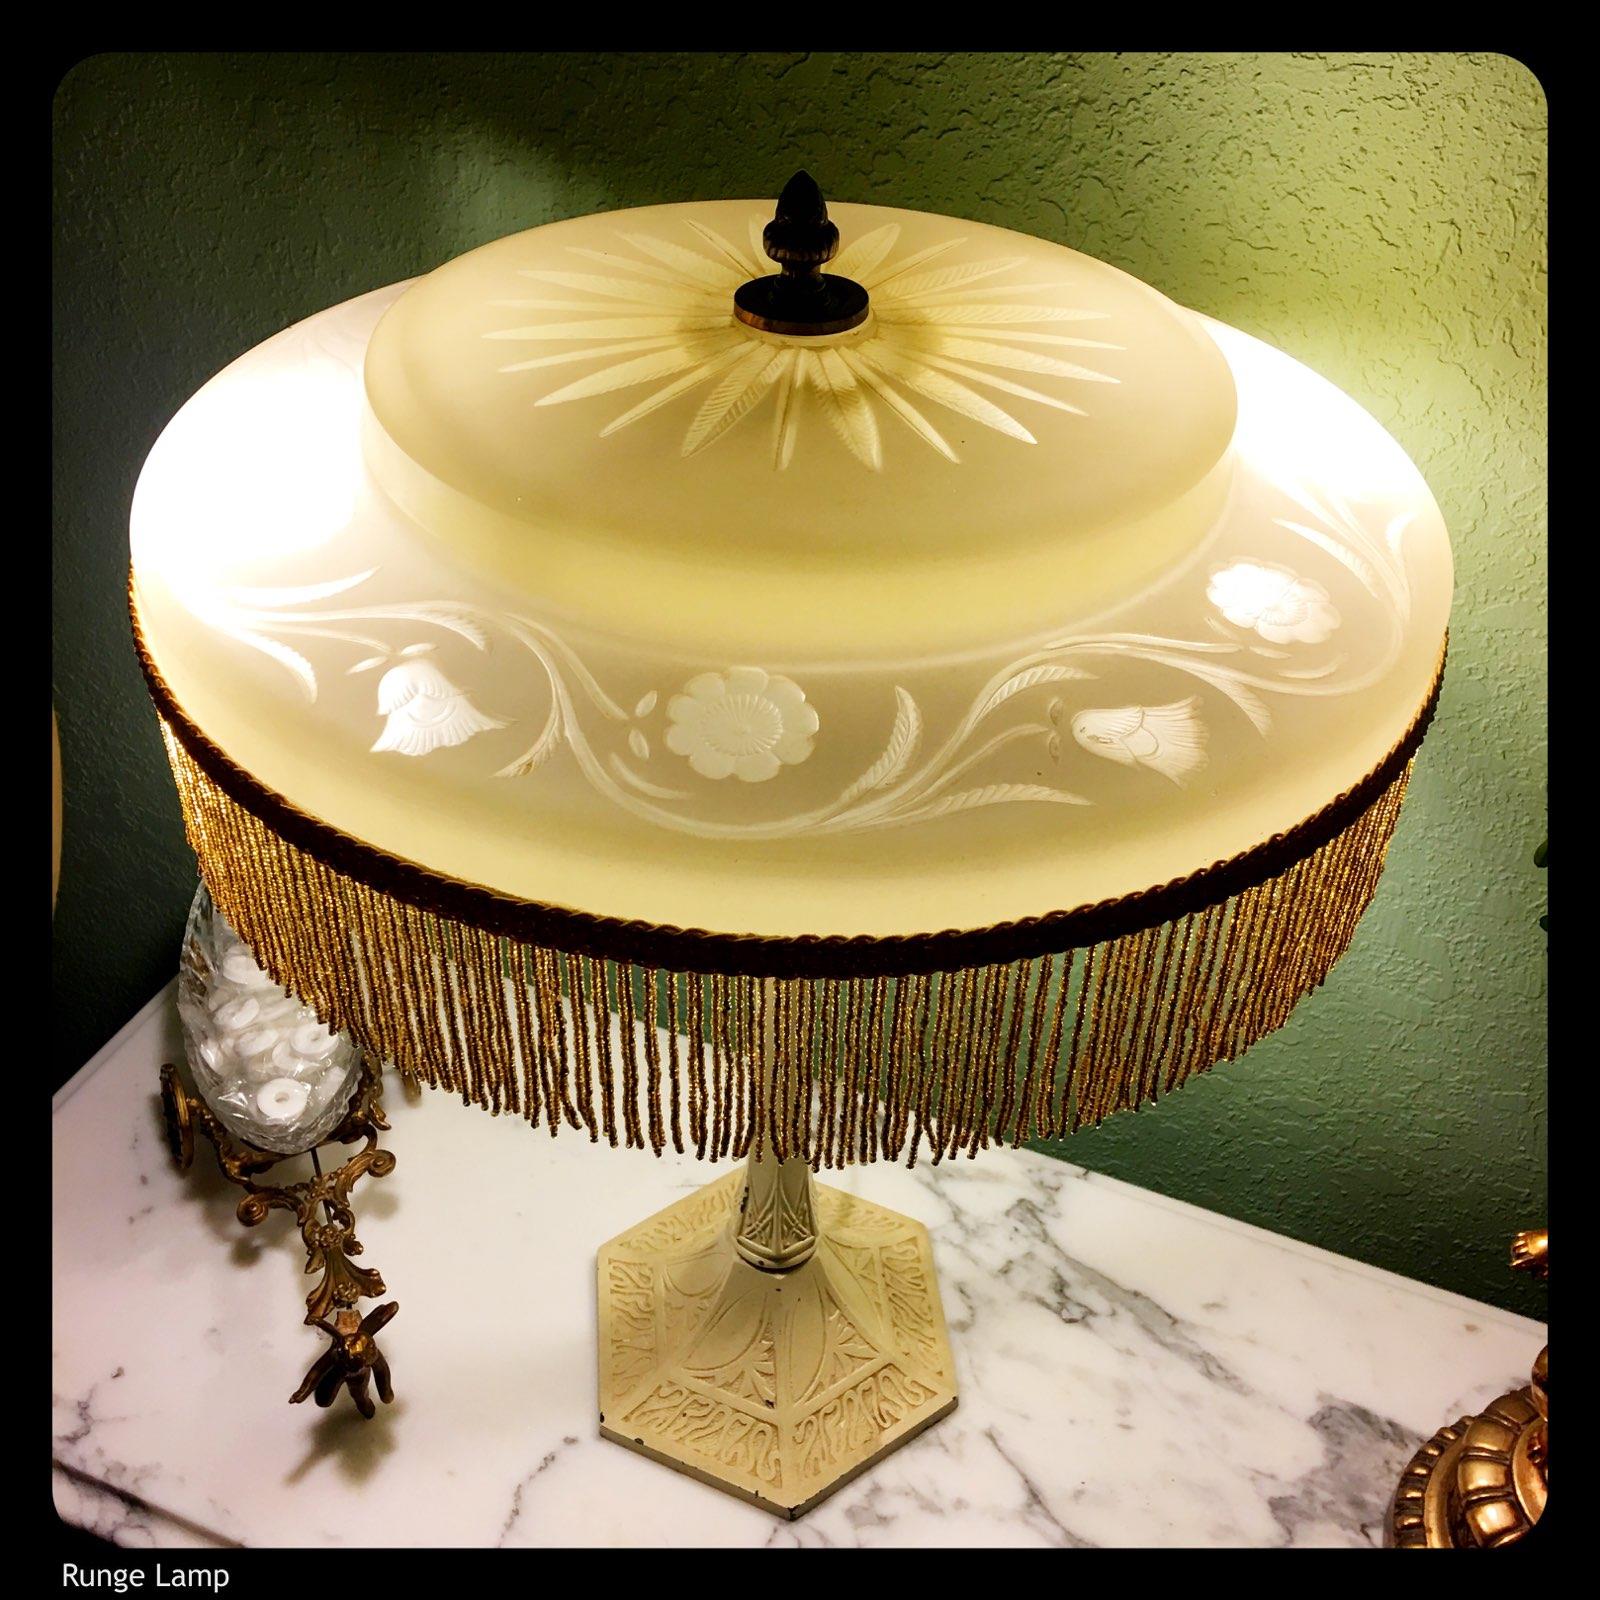 Turn of the century white Tiffany-style lamp